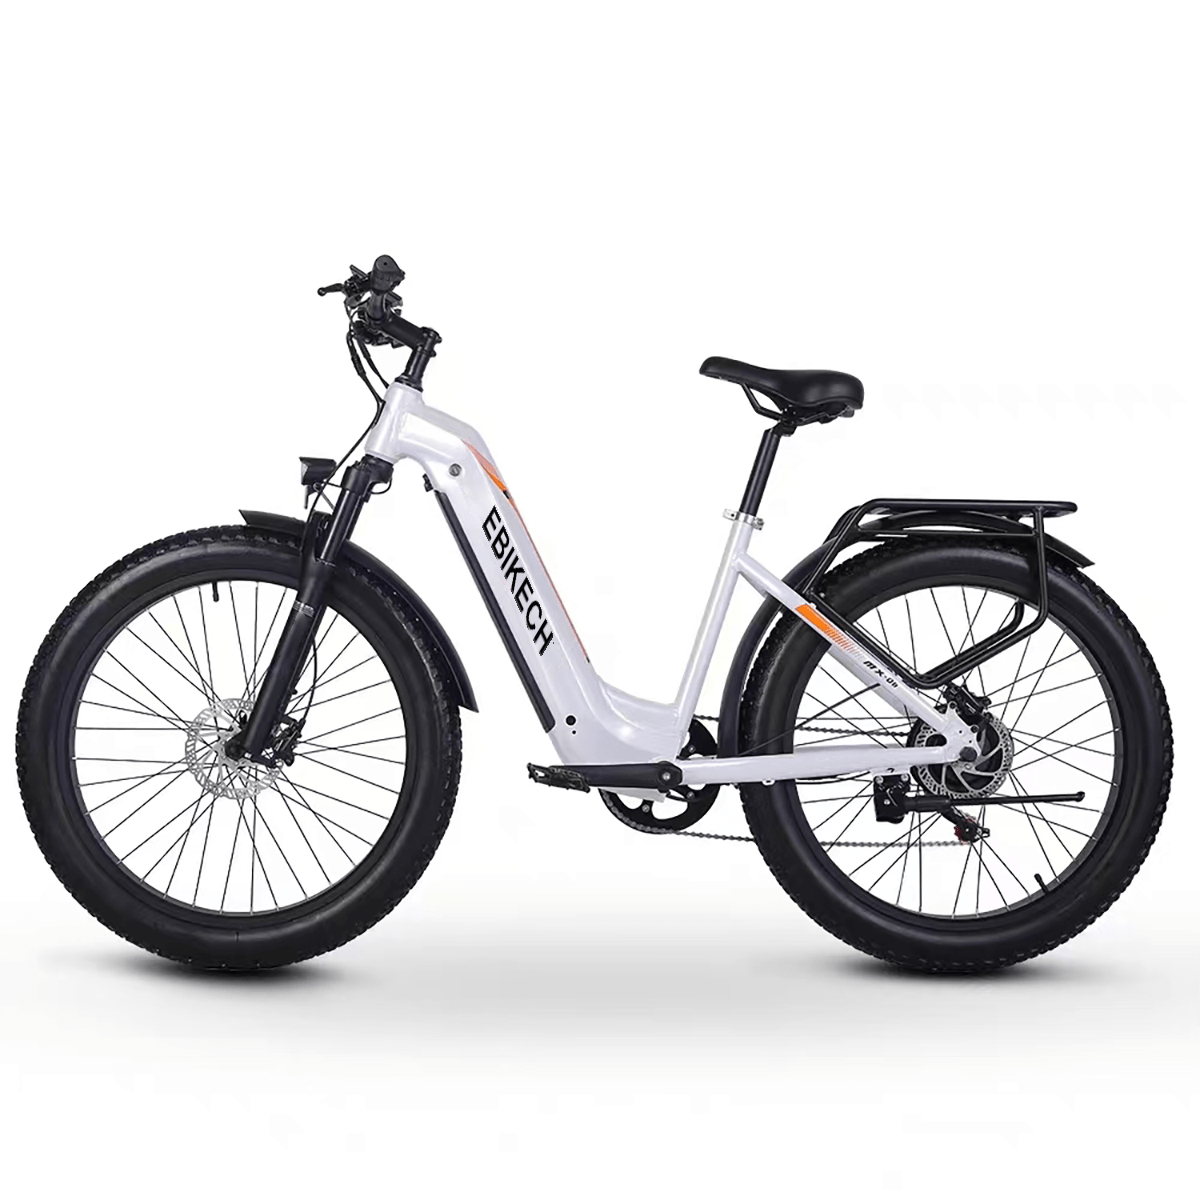 V3 electric city commuter bike